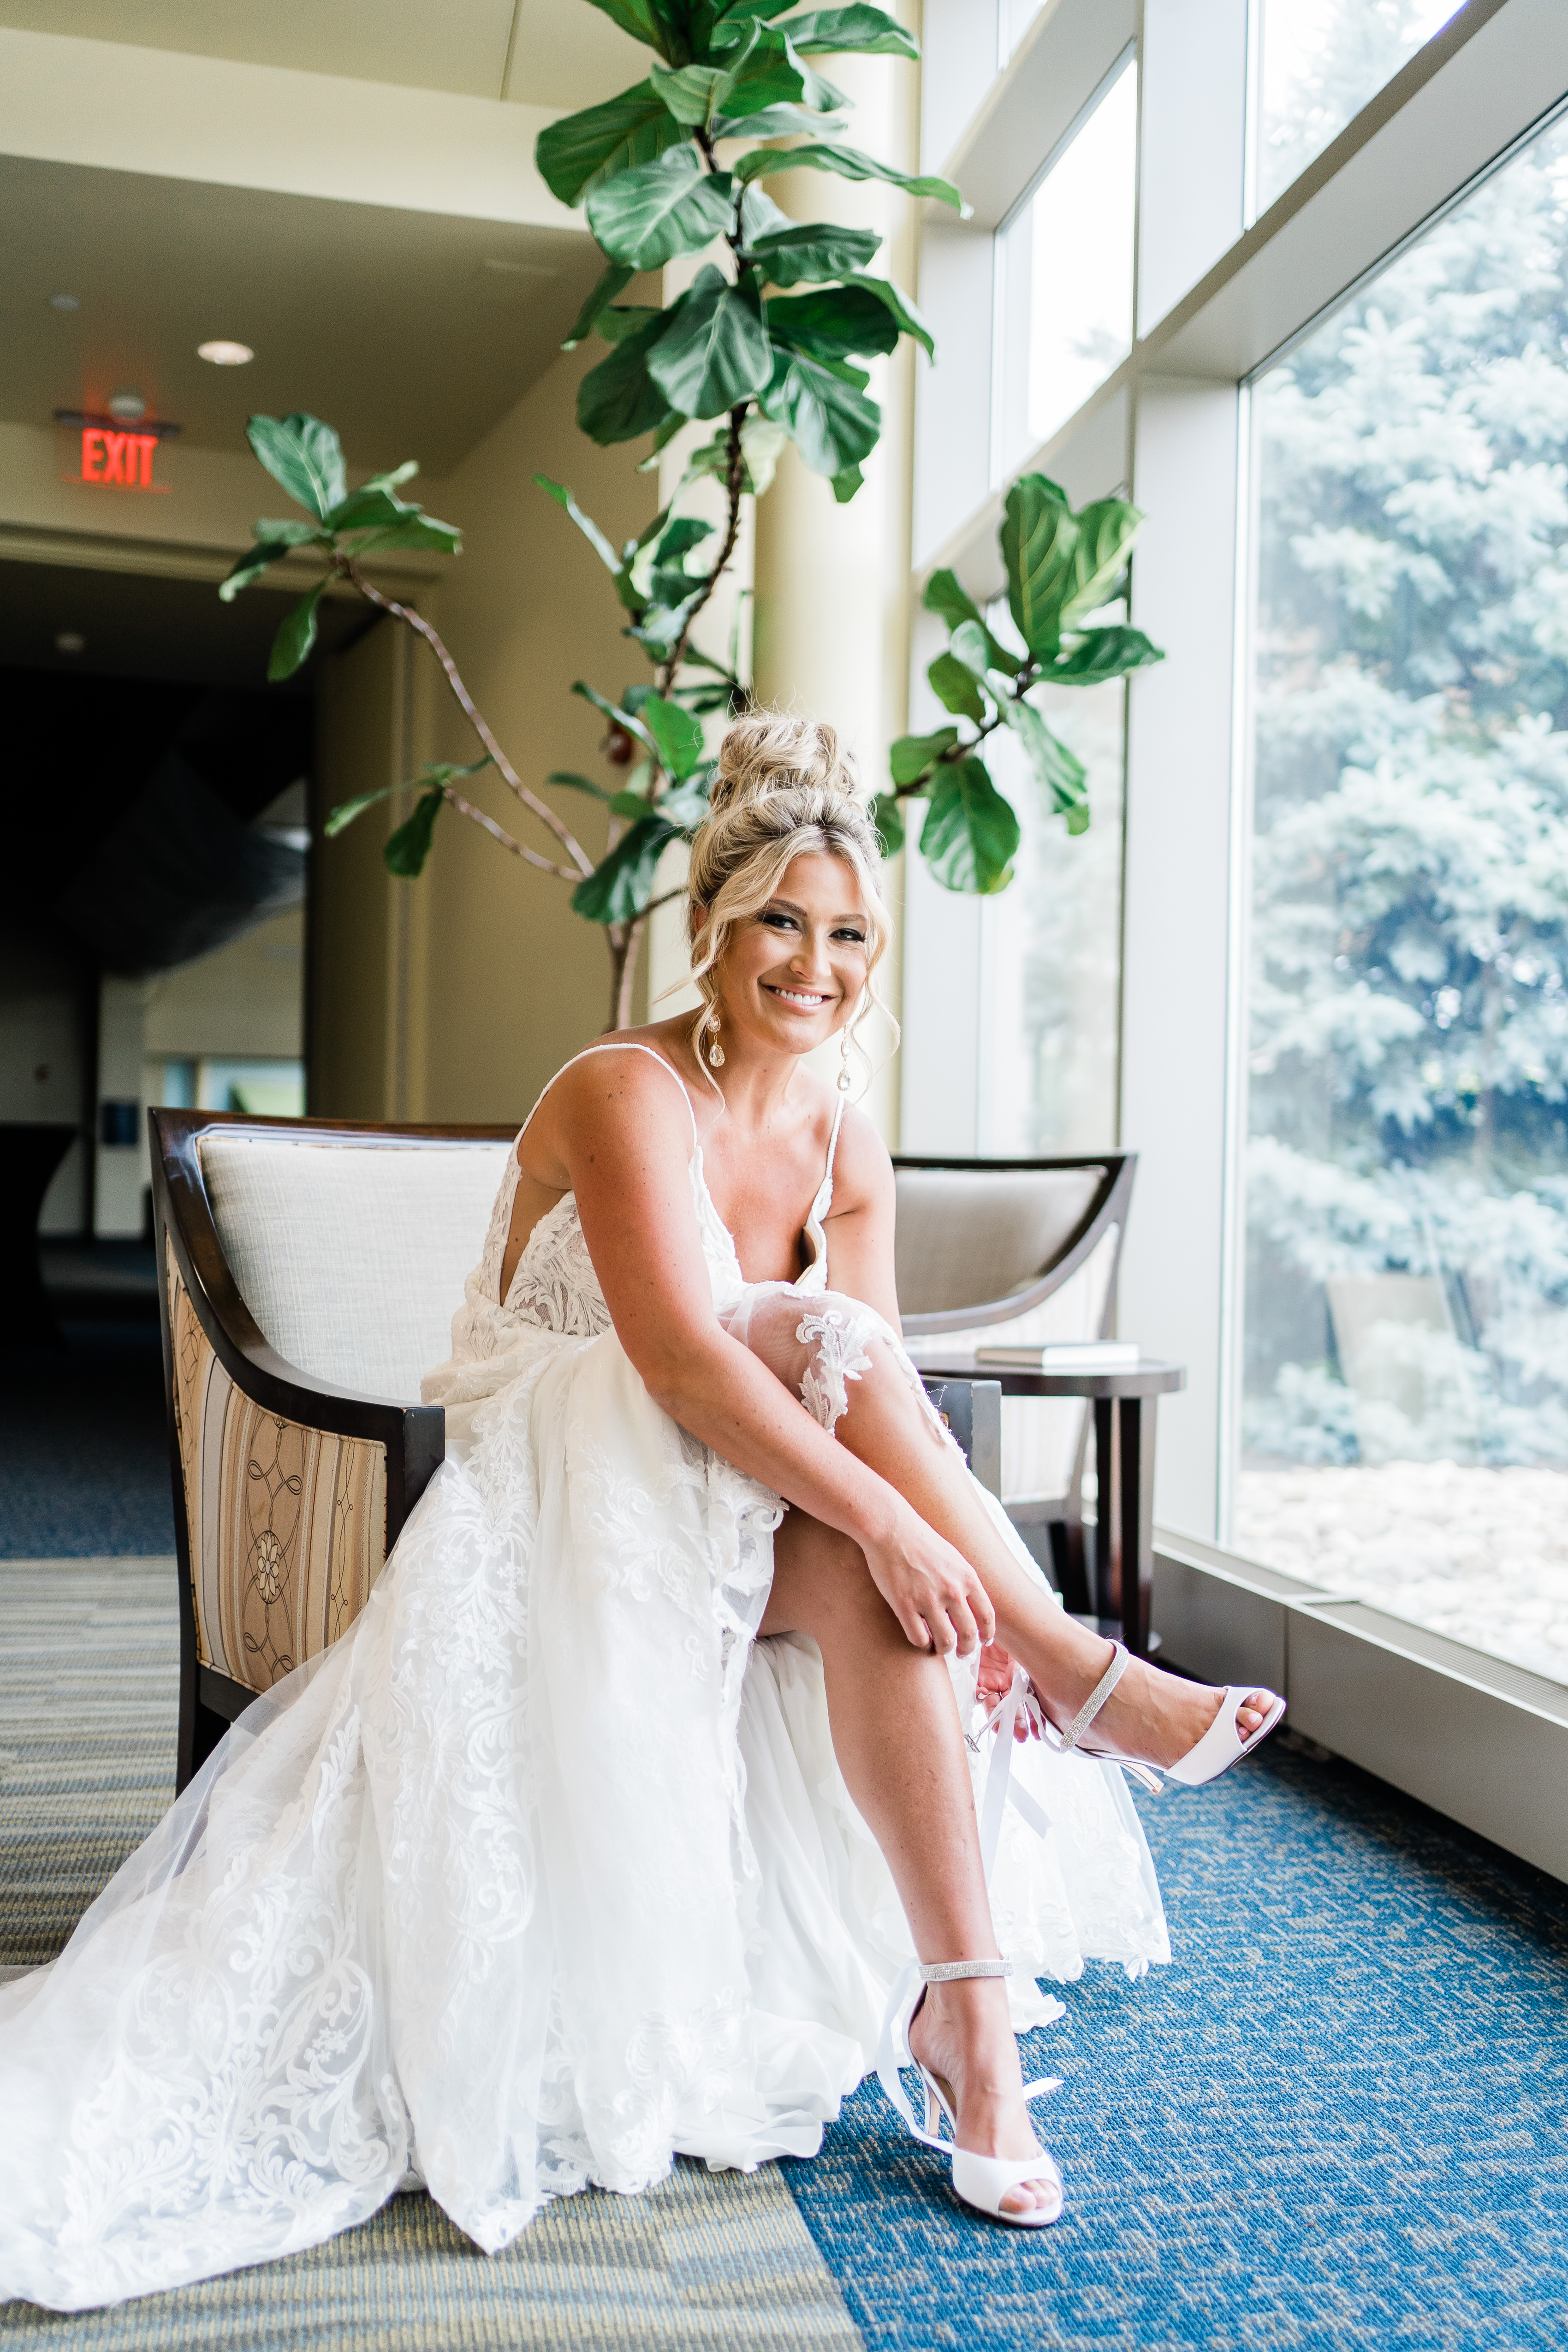 Fort Wayne wedding photographer captures bride putting on shoes